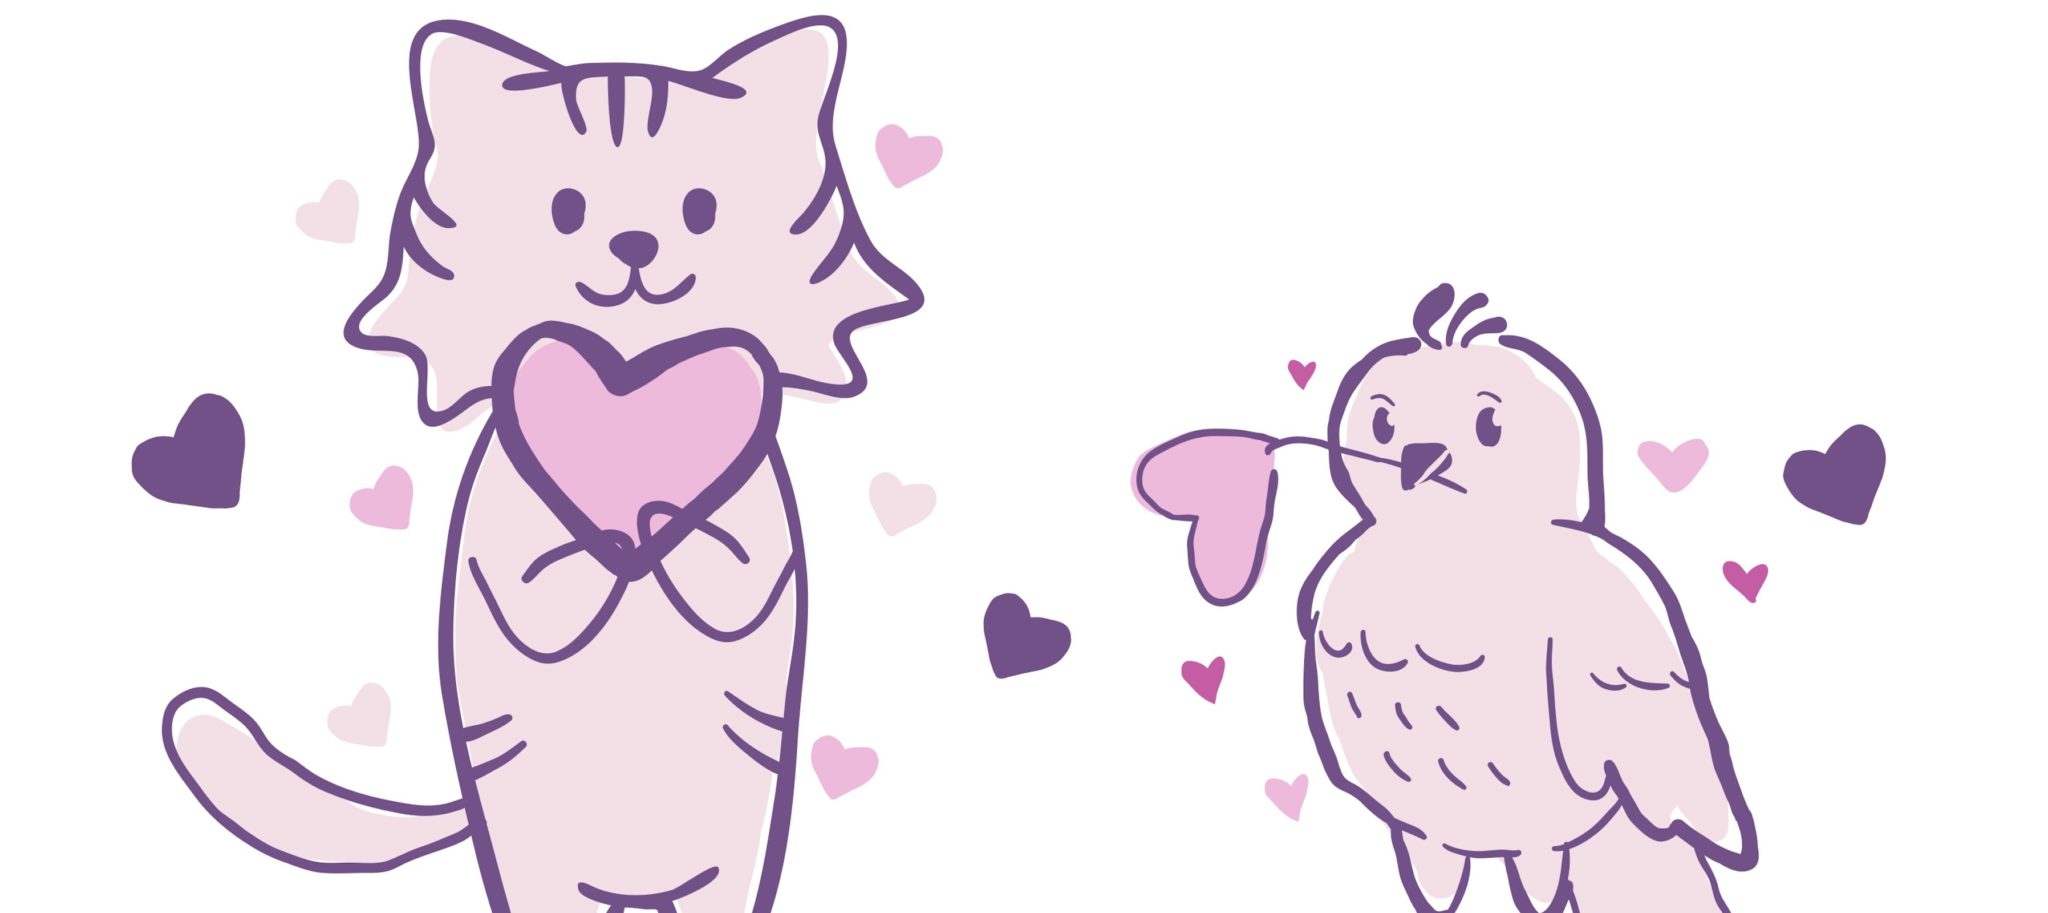 Cat and bird in love